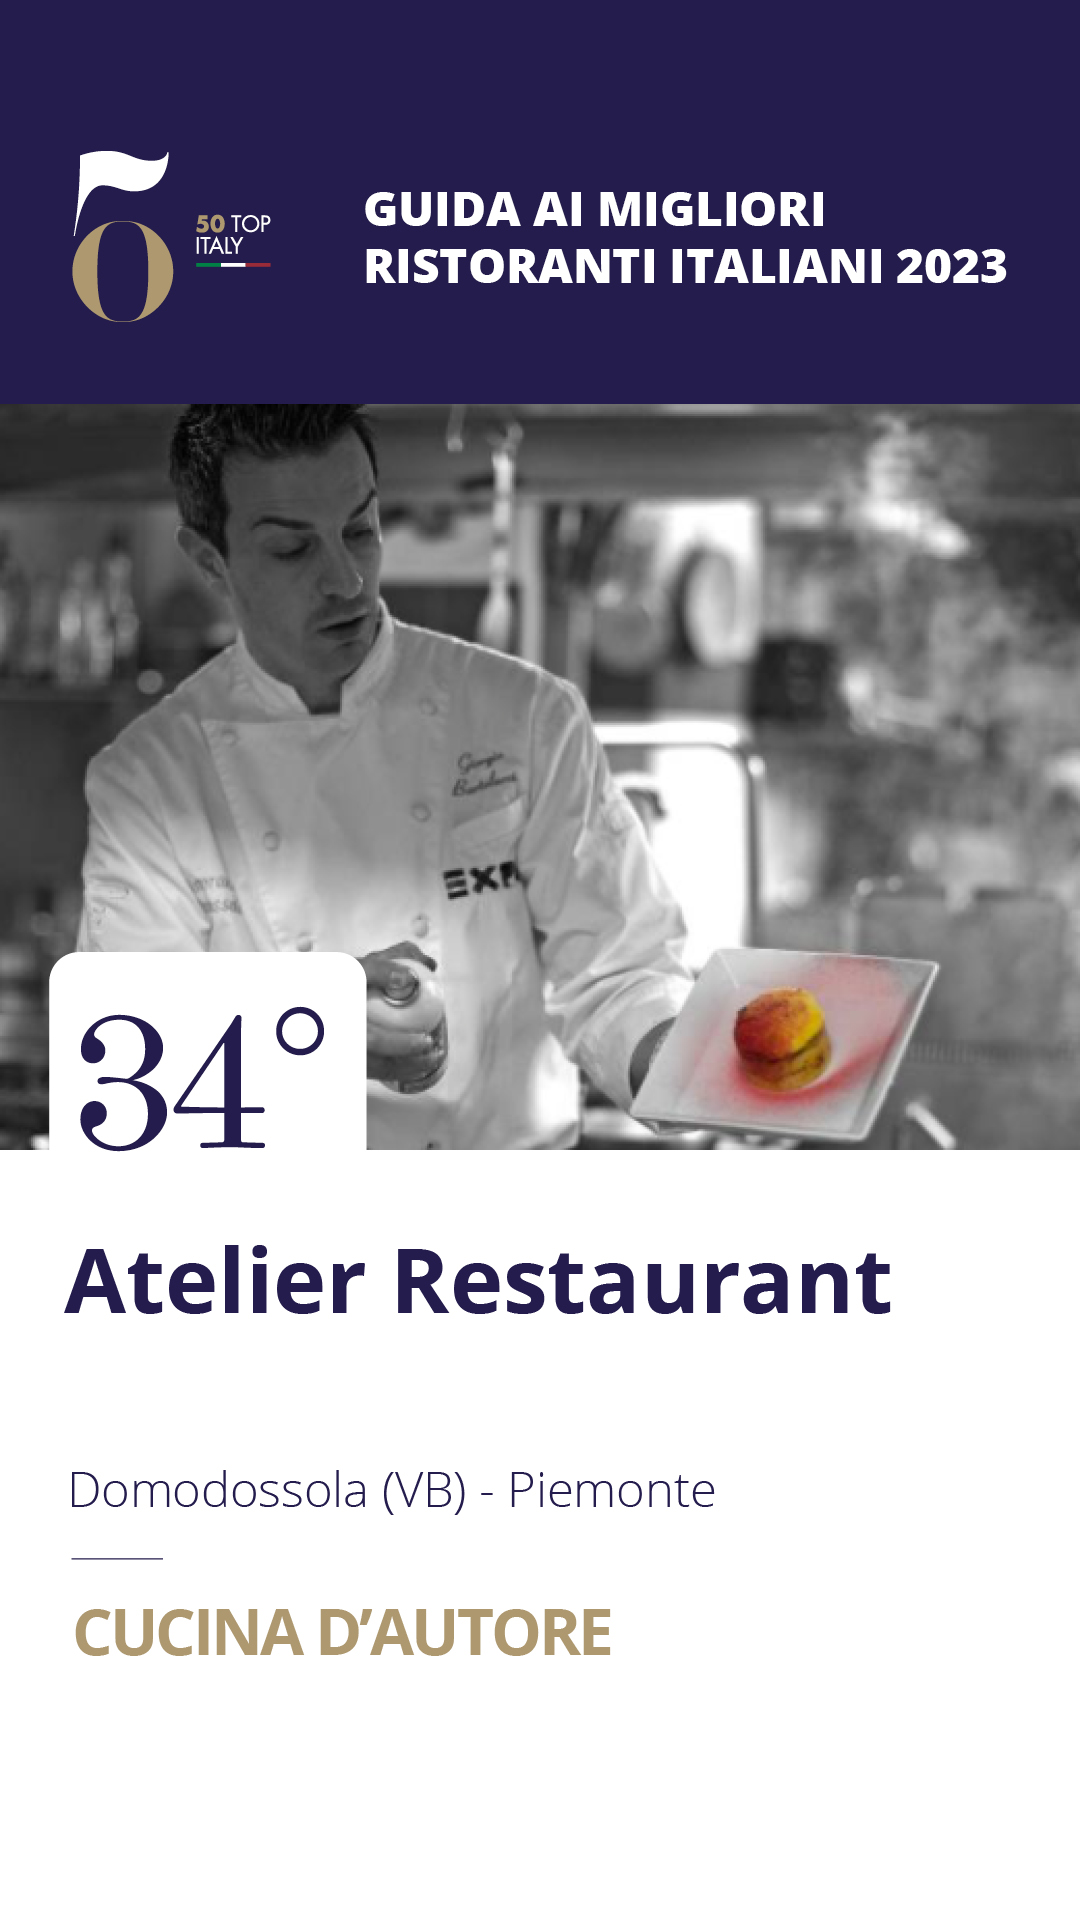 34 - Atelier Restaurant